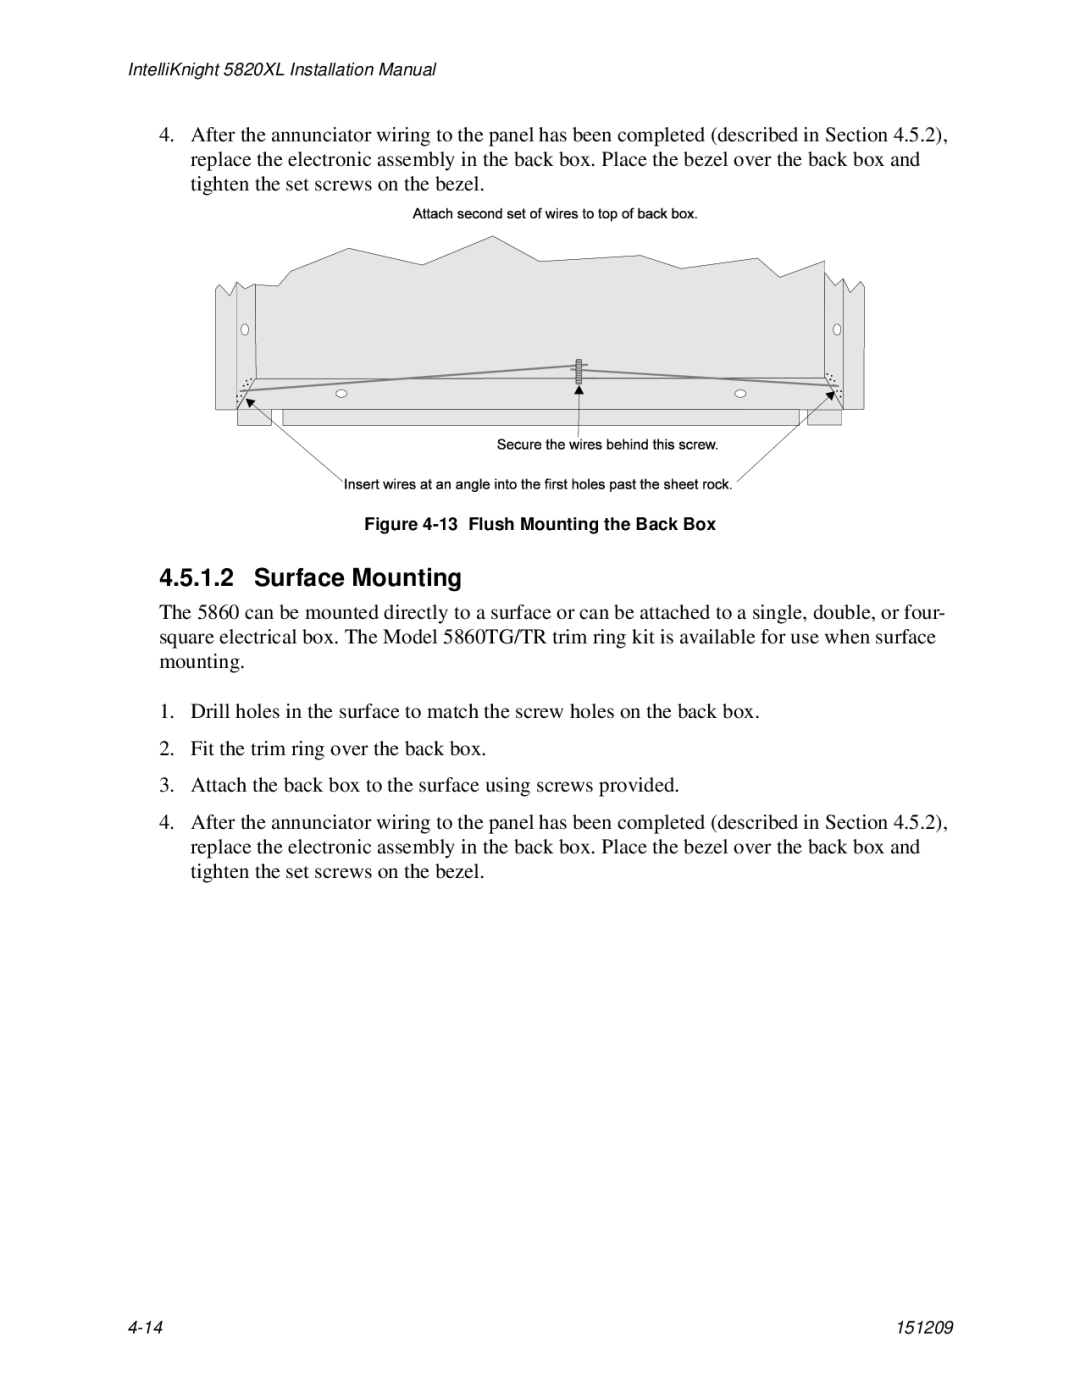 Honeywell 5820XL manual Surface Mounting, Flush Mounting the Back Box 